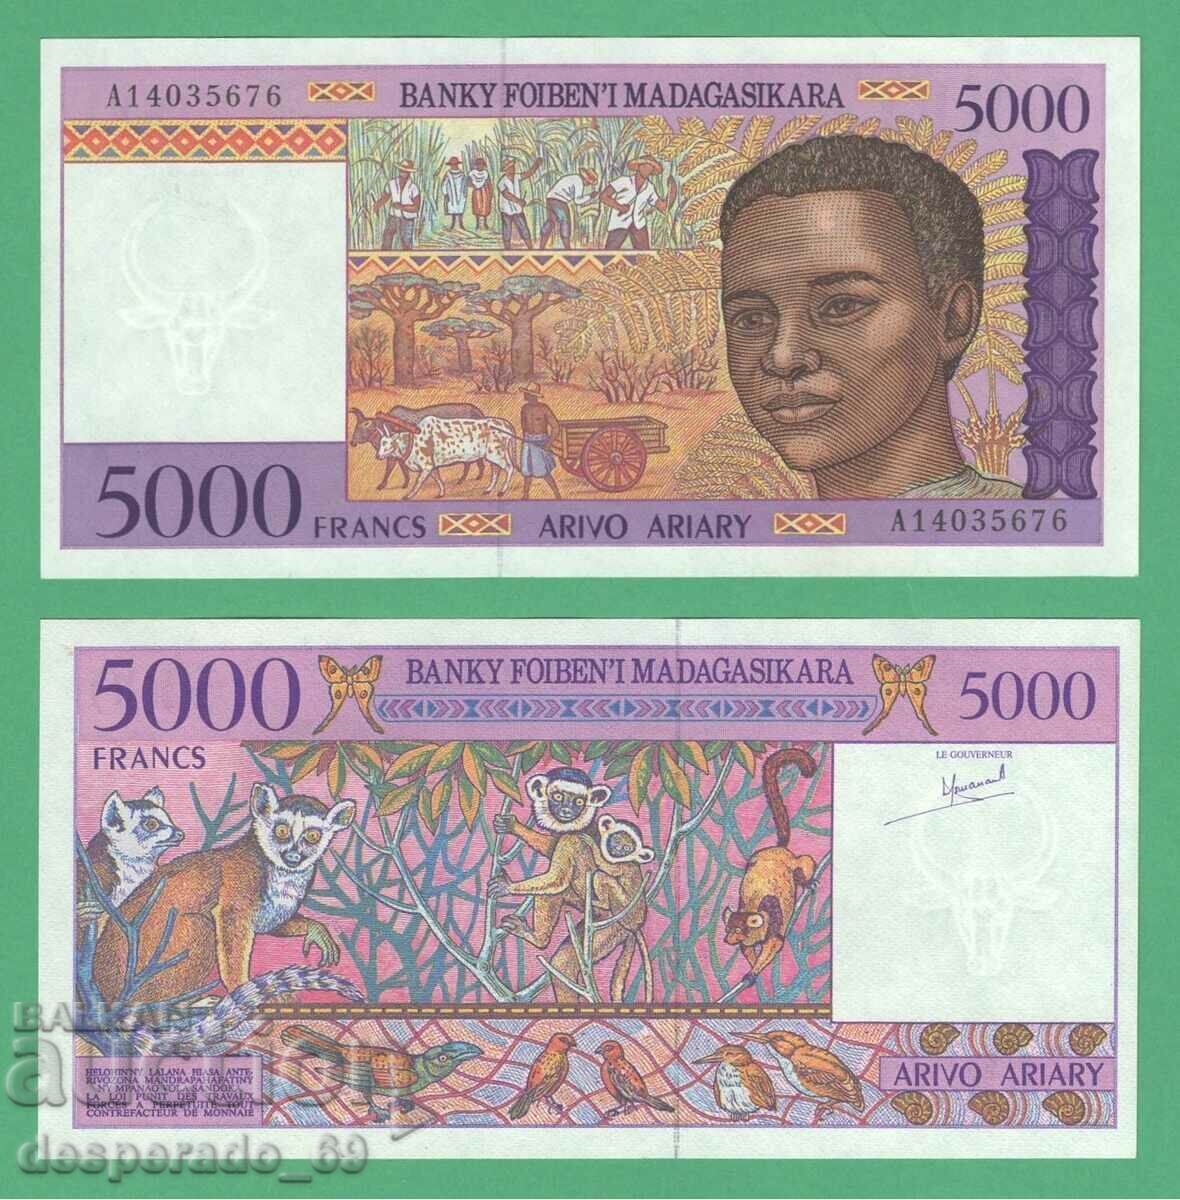 (¯`'•.¸ MADAGASCAR 5000 francs 1995 UNC ¸.•'´¯)